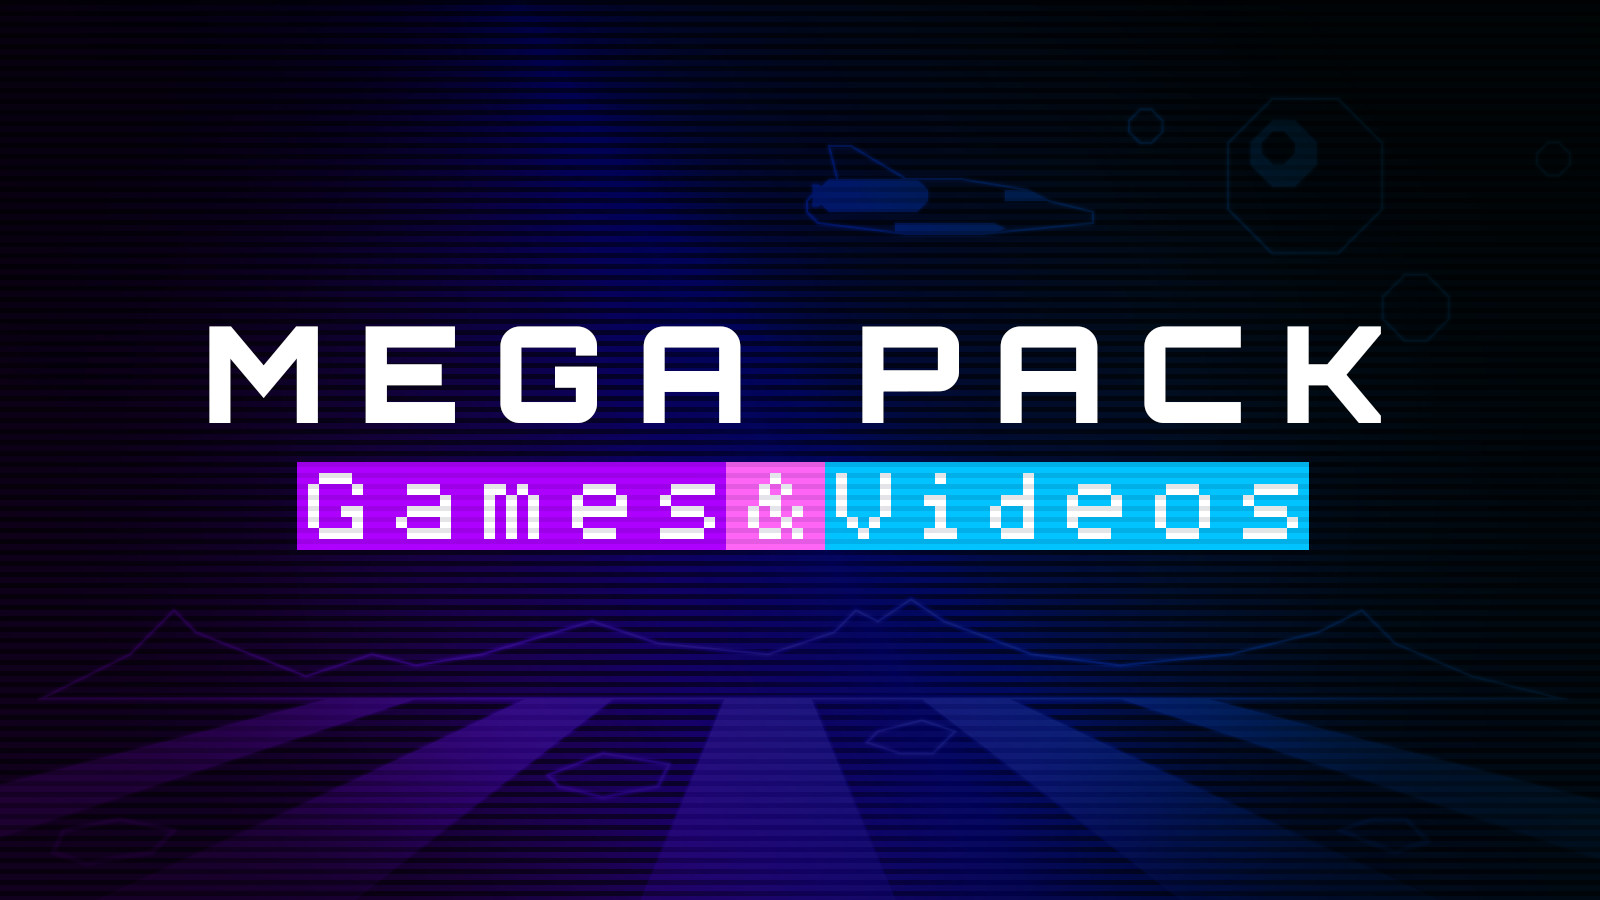 Rytmik Studio – MEGA PACK: Games & Videos Featured Screenshot #1